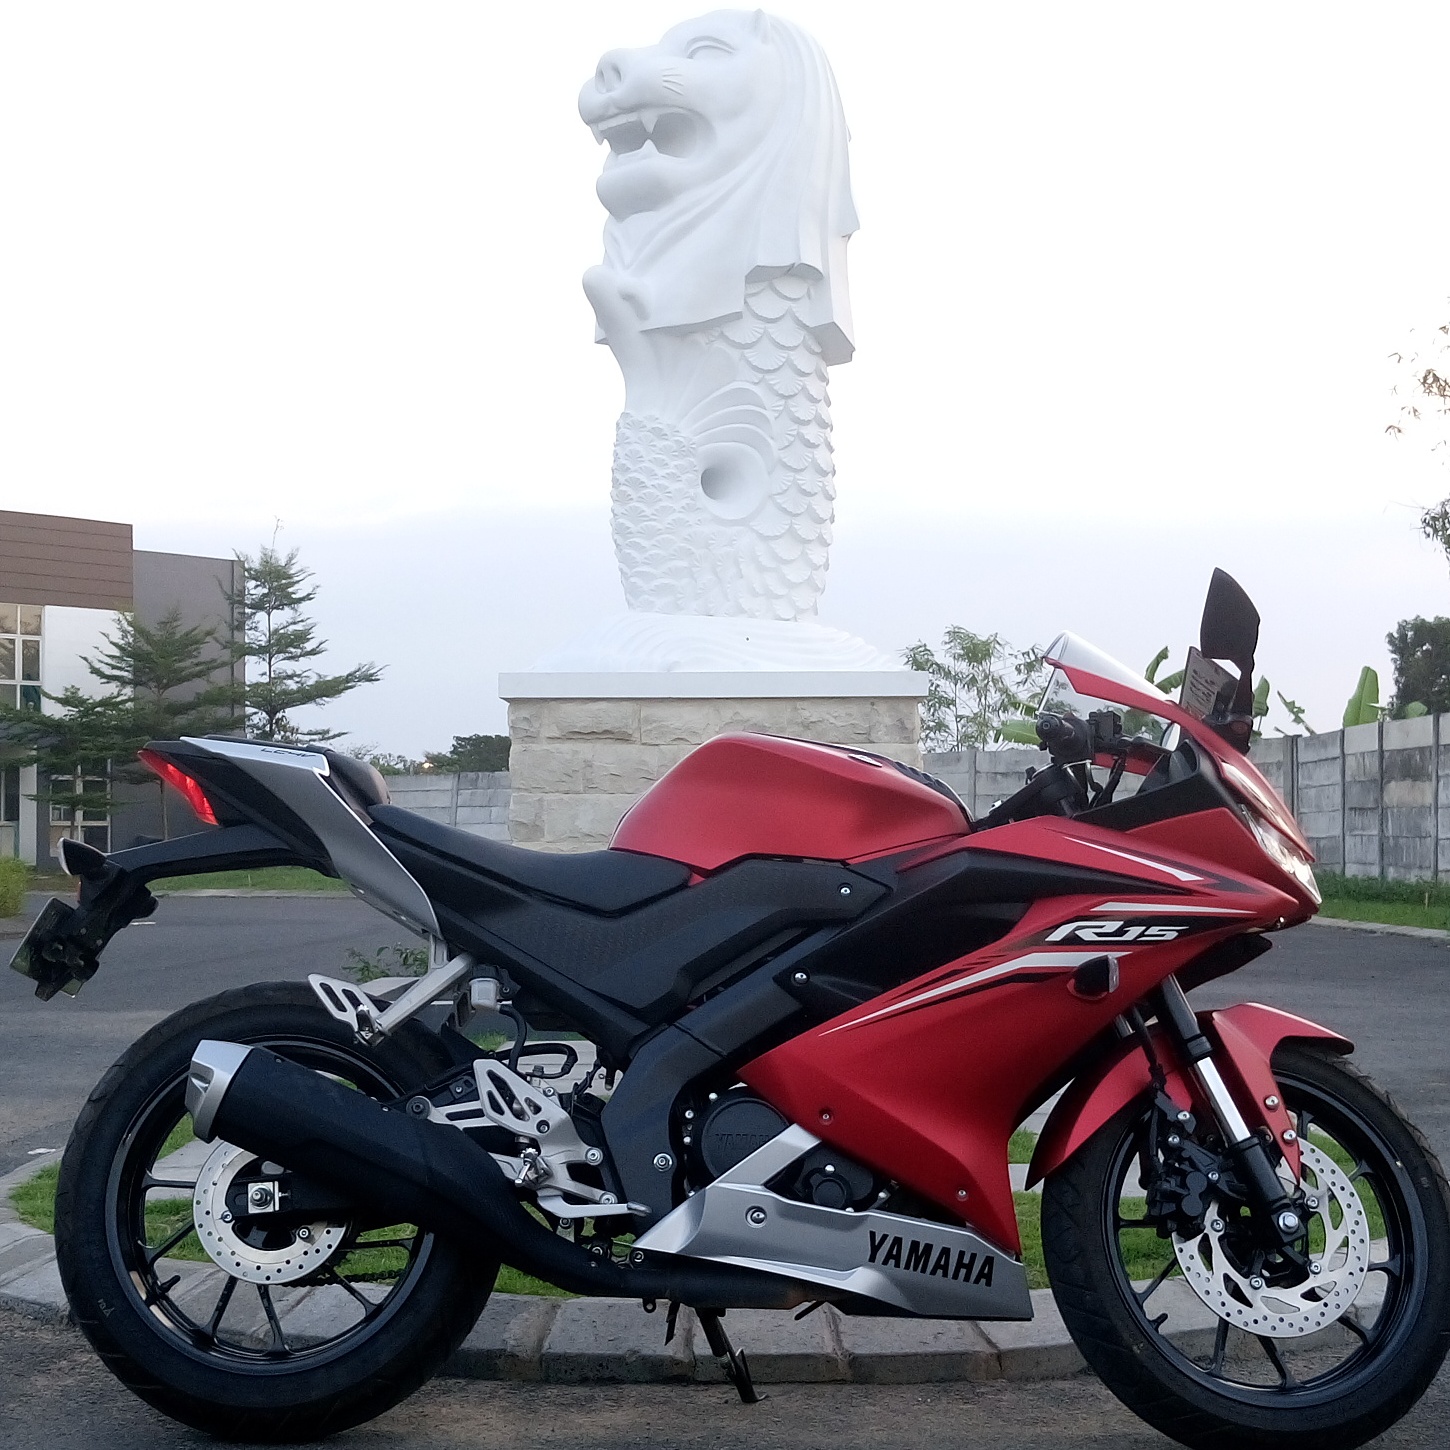 Test Ride Harian Yamaha All New R15 Sport 150cc Yang Berasa Moge